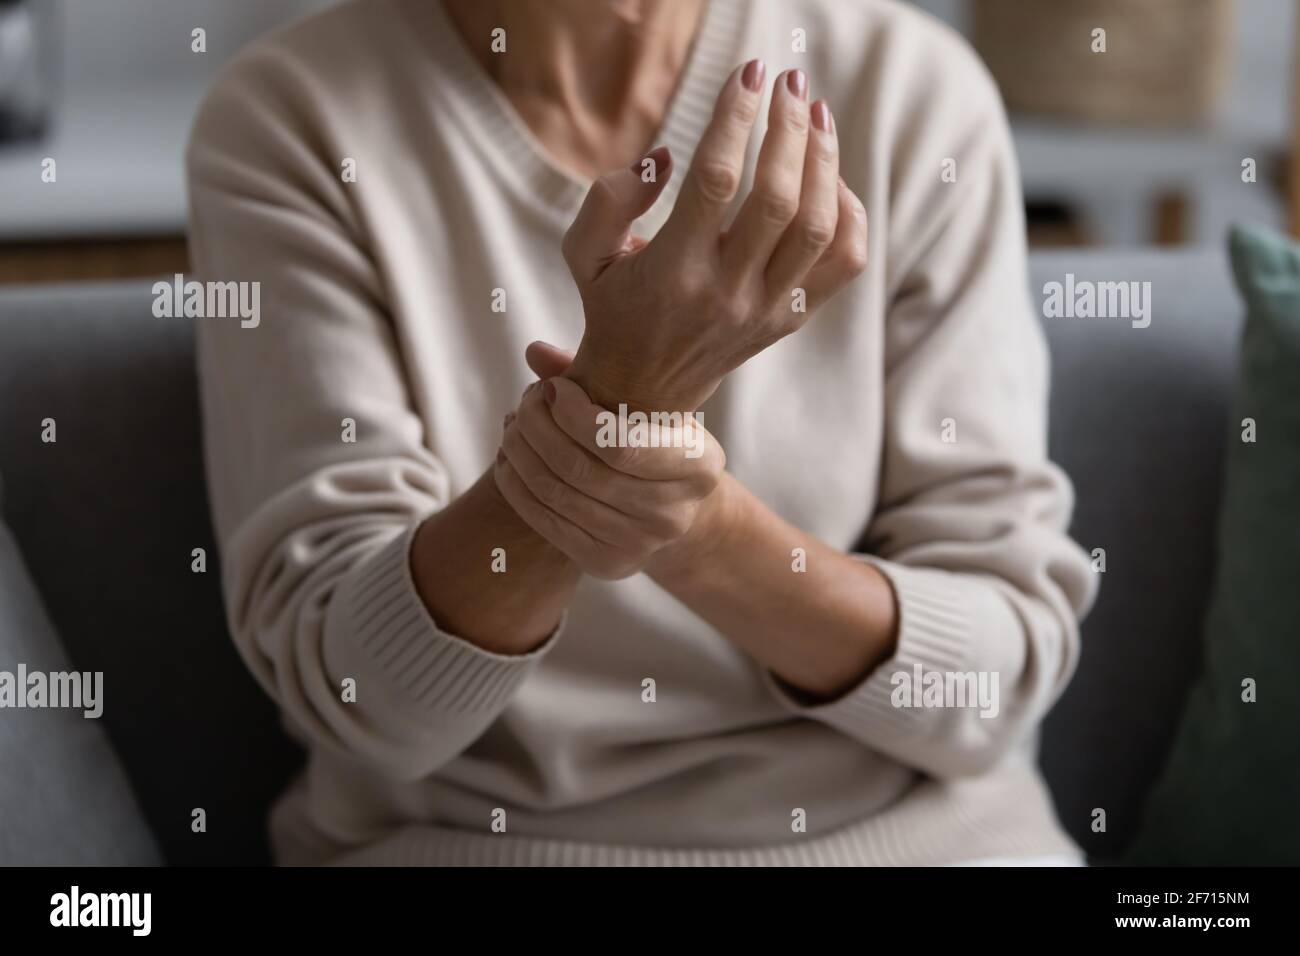 Middle aged elderly woman feeling wrist pain Stock Photo